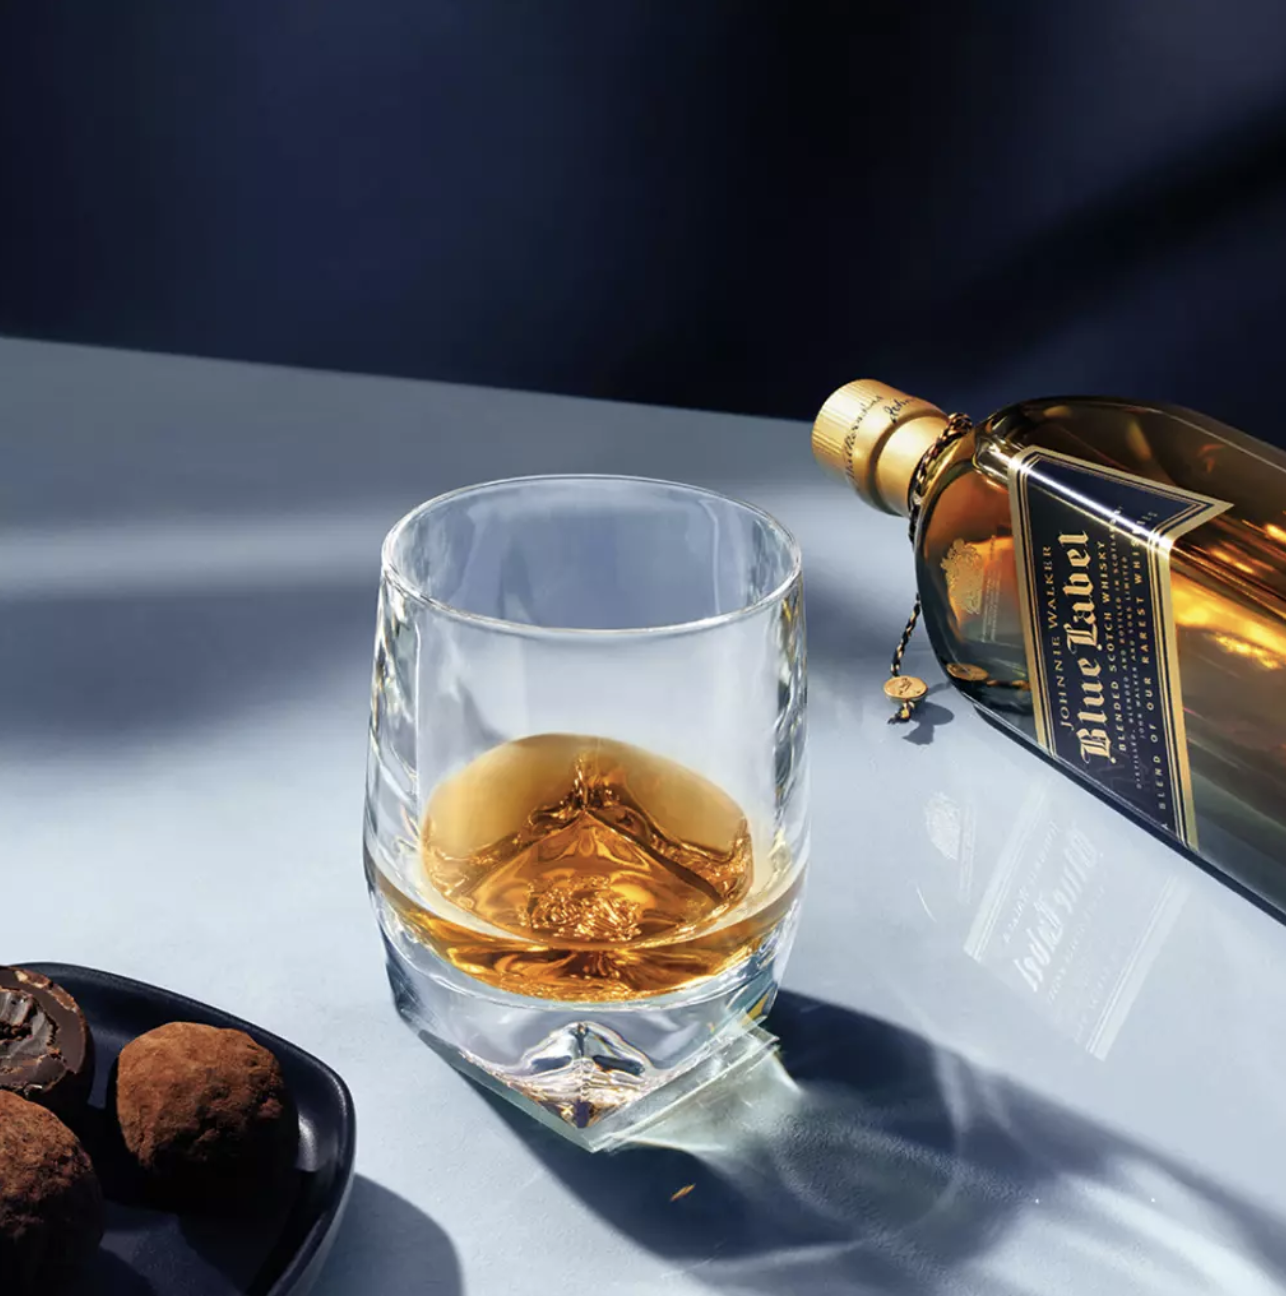 Johnnie Walker Blue Label: The Apex of Scotch Whisky Craftsmanship